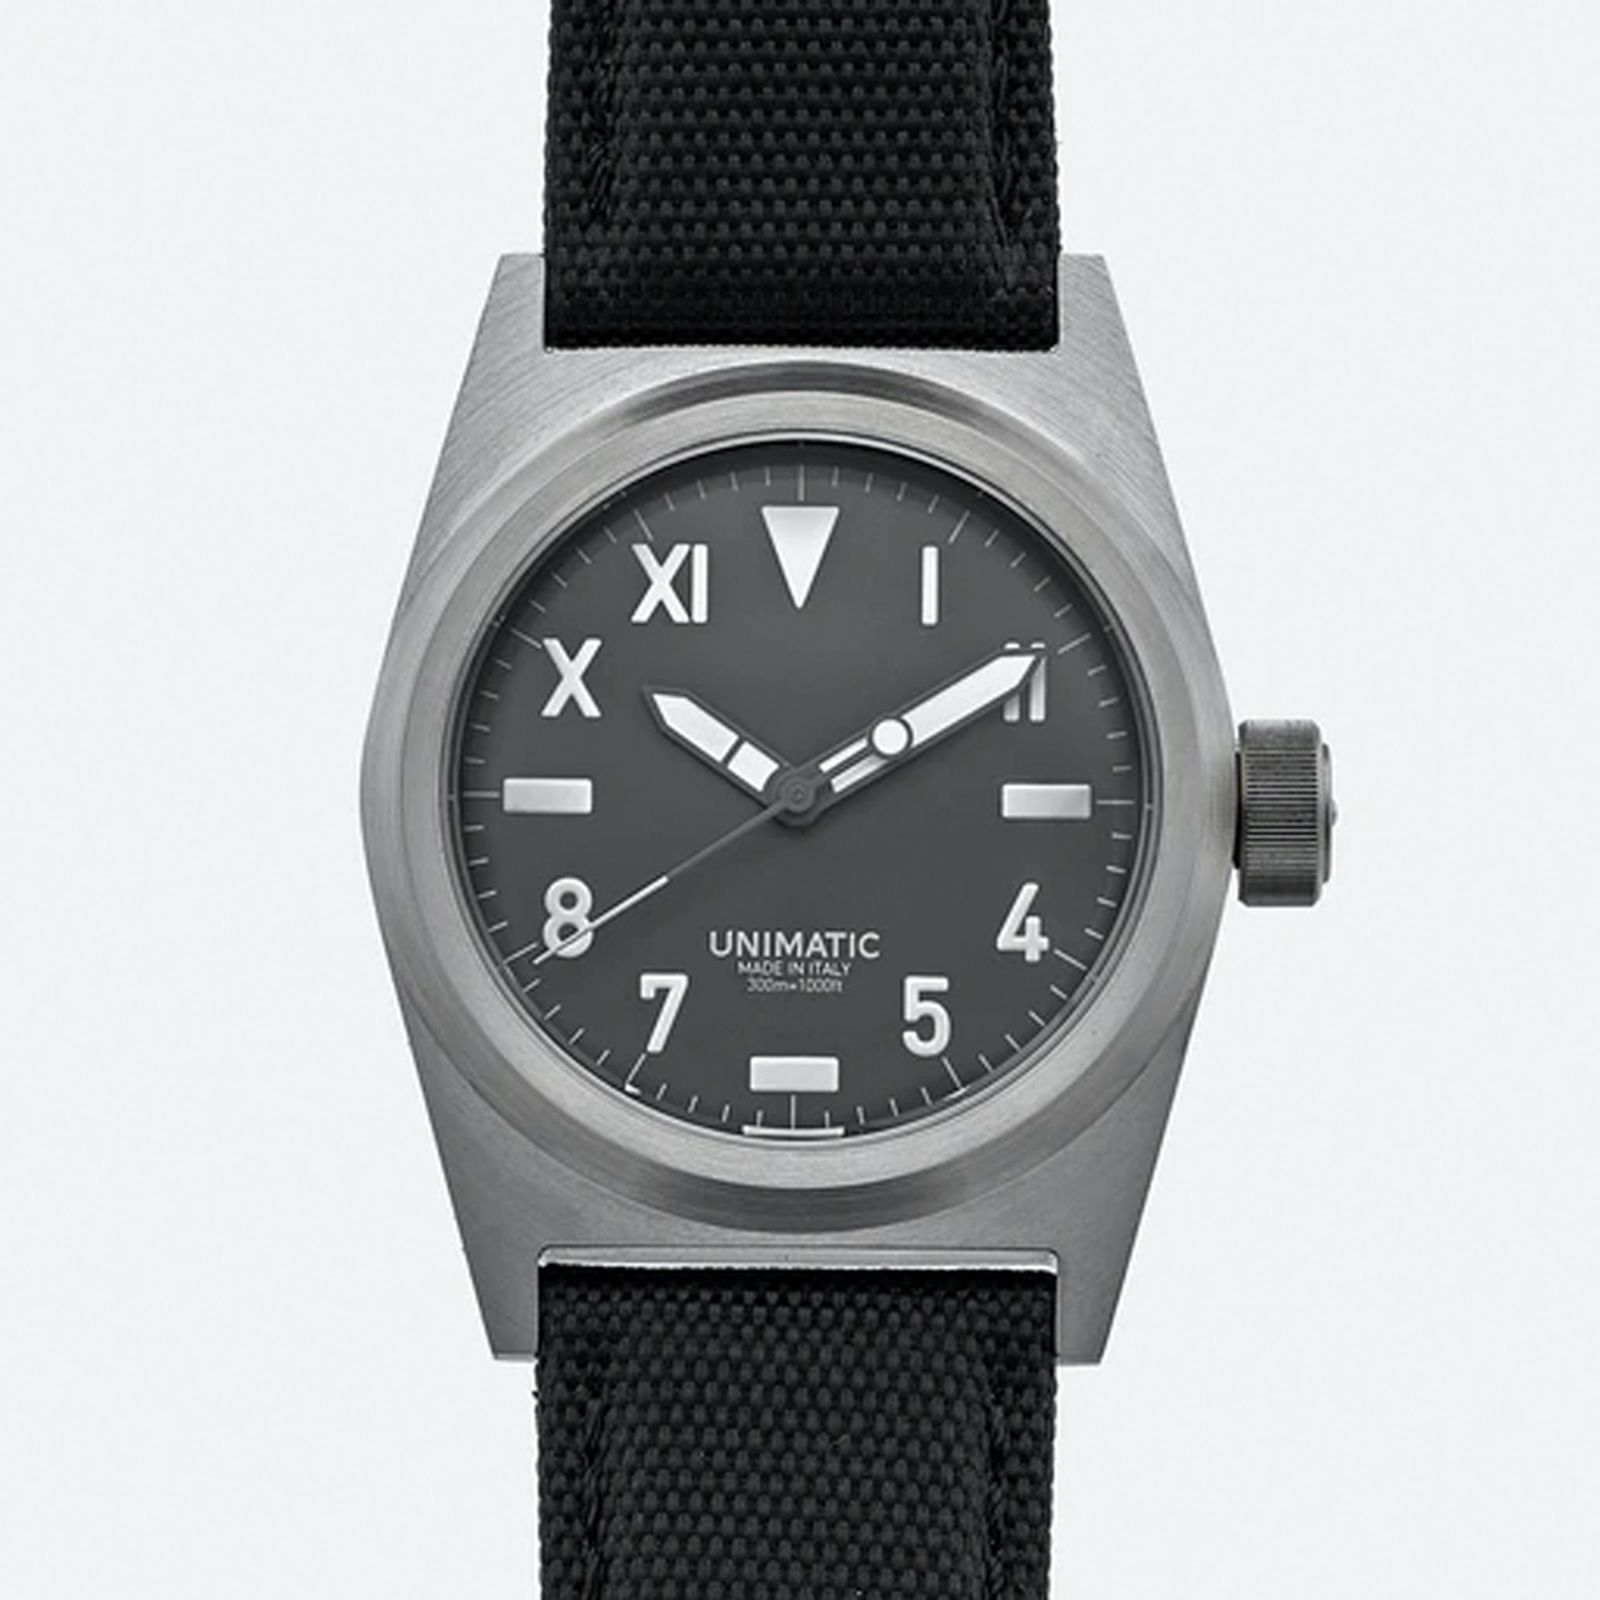 hodinkee-unimatic-price-release-date-01